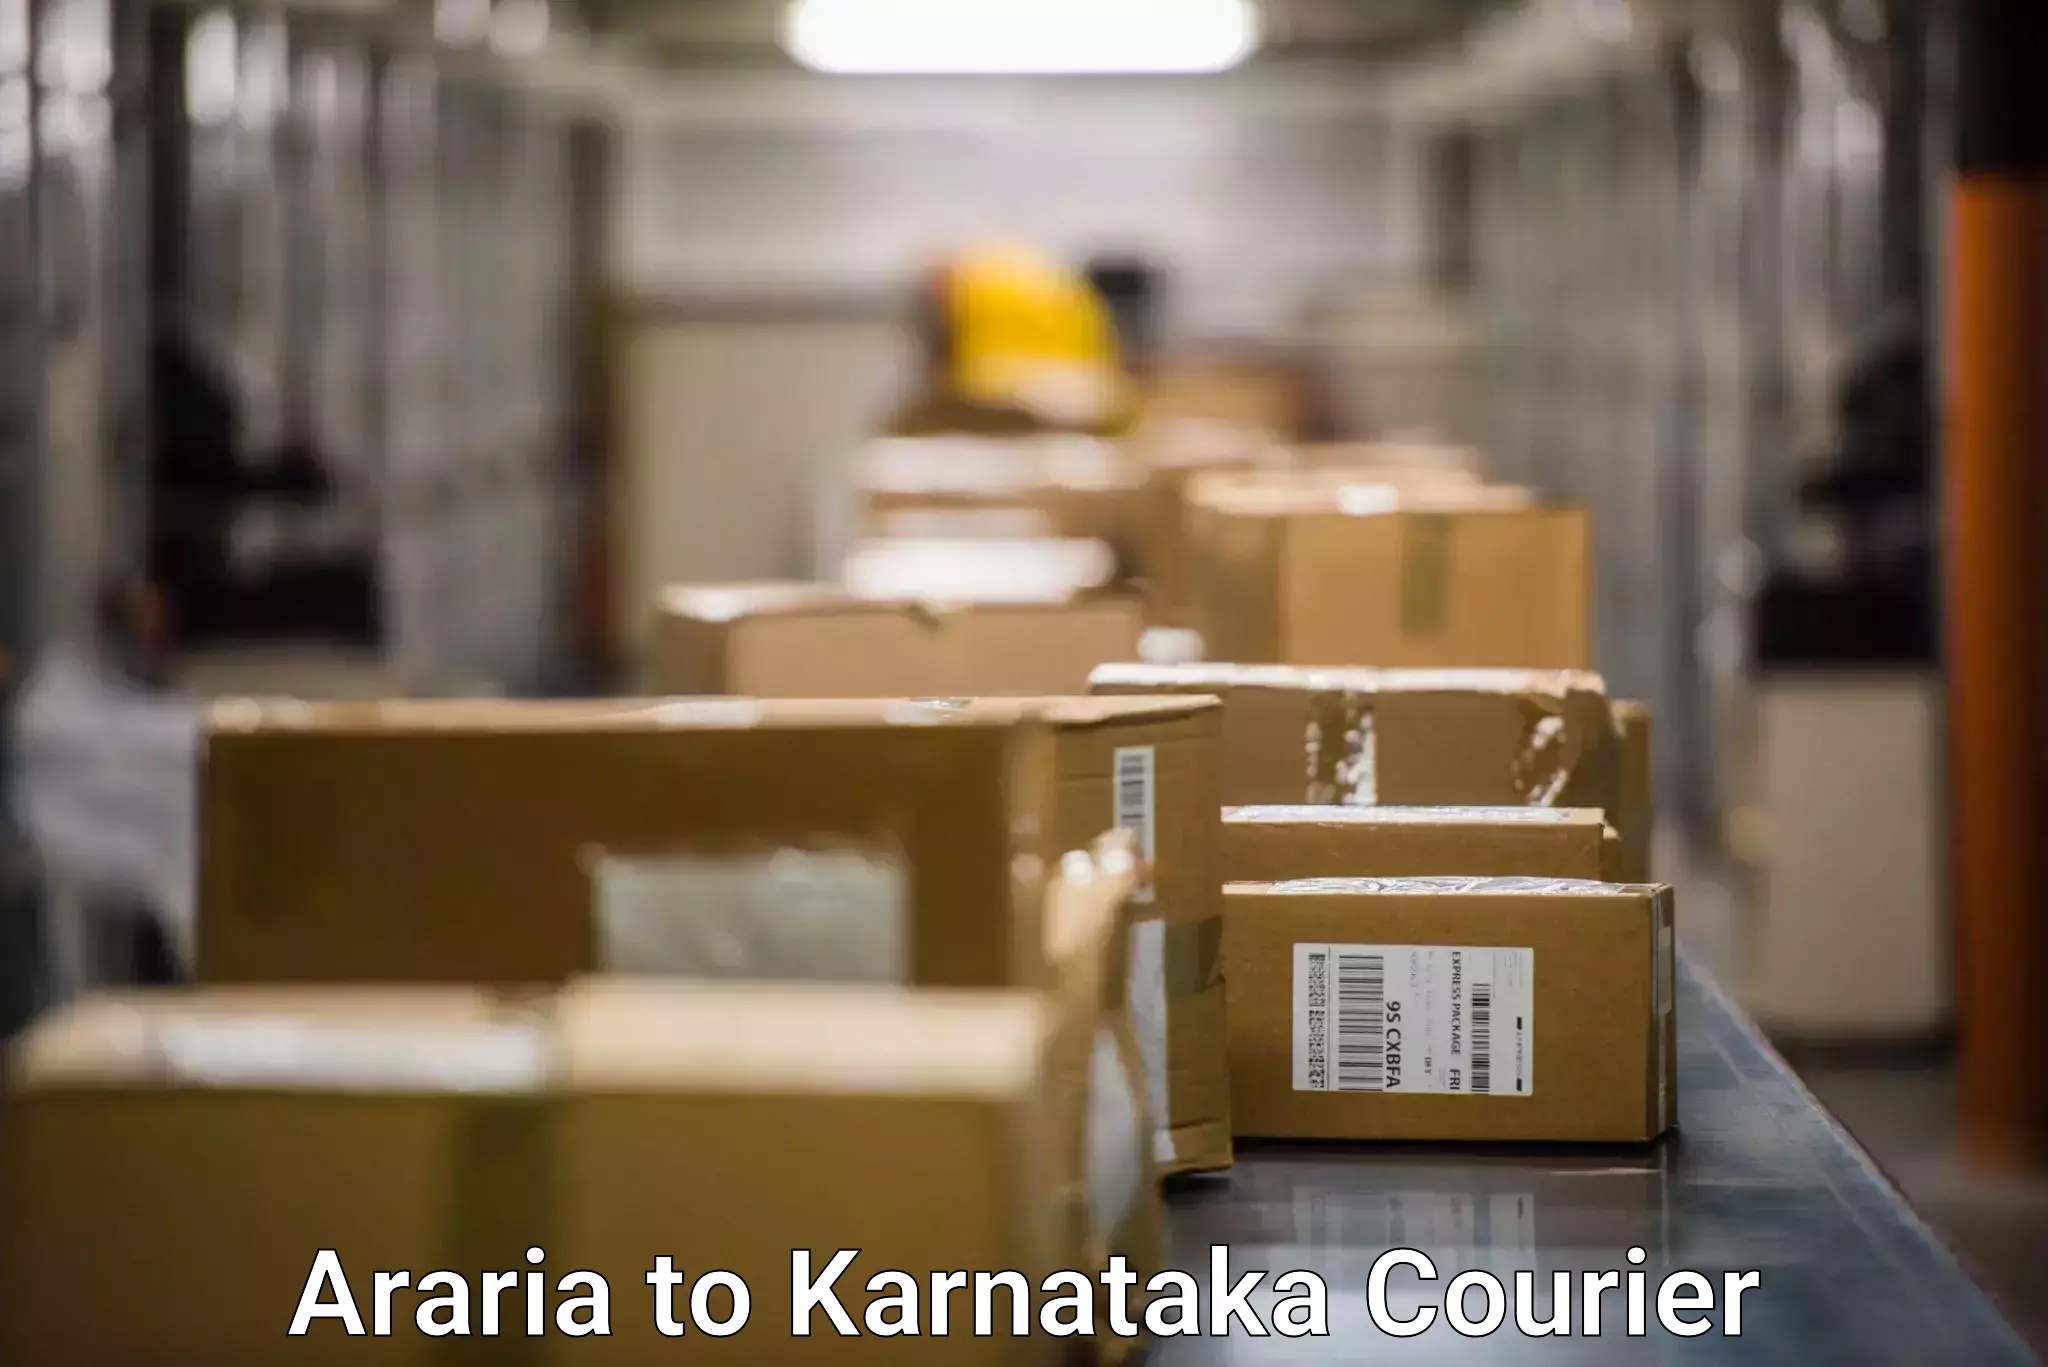 Cash on delivery service Araria to Karnataka